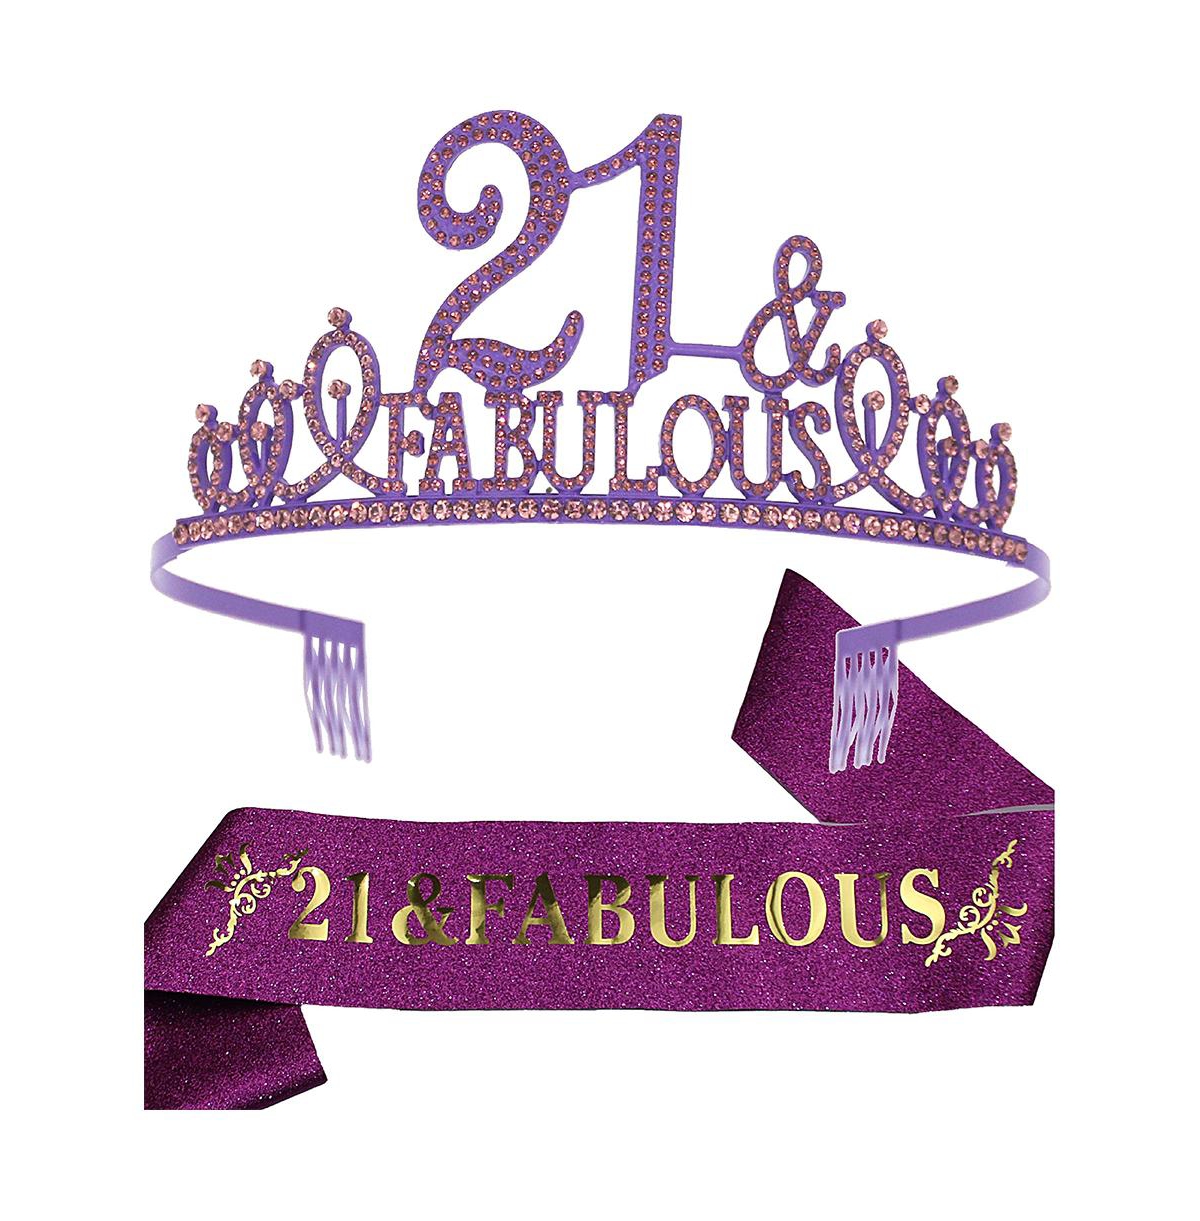 21st Birthday Sash and Tiara Set for Women - Glitter Sash and Fabulous Rhinestone Pink Metal Tiara, Perfect for 21st Birthday Party Celebration and Gi